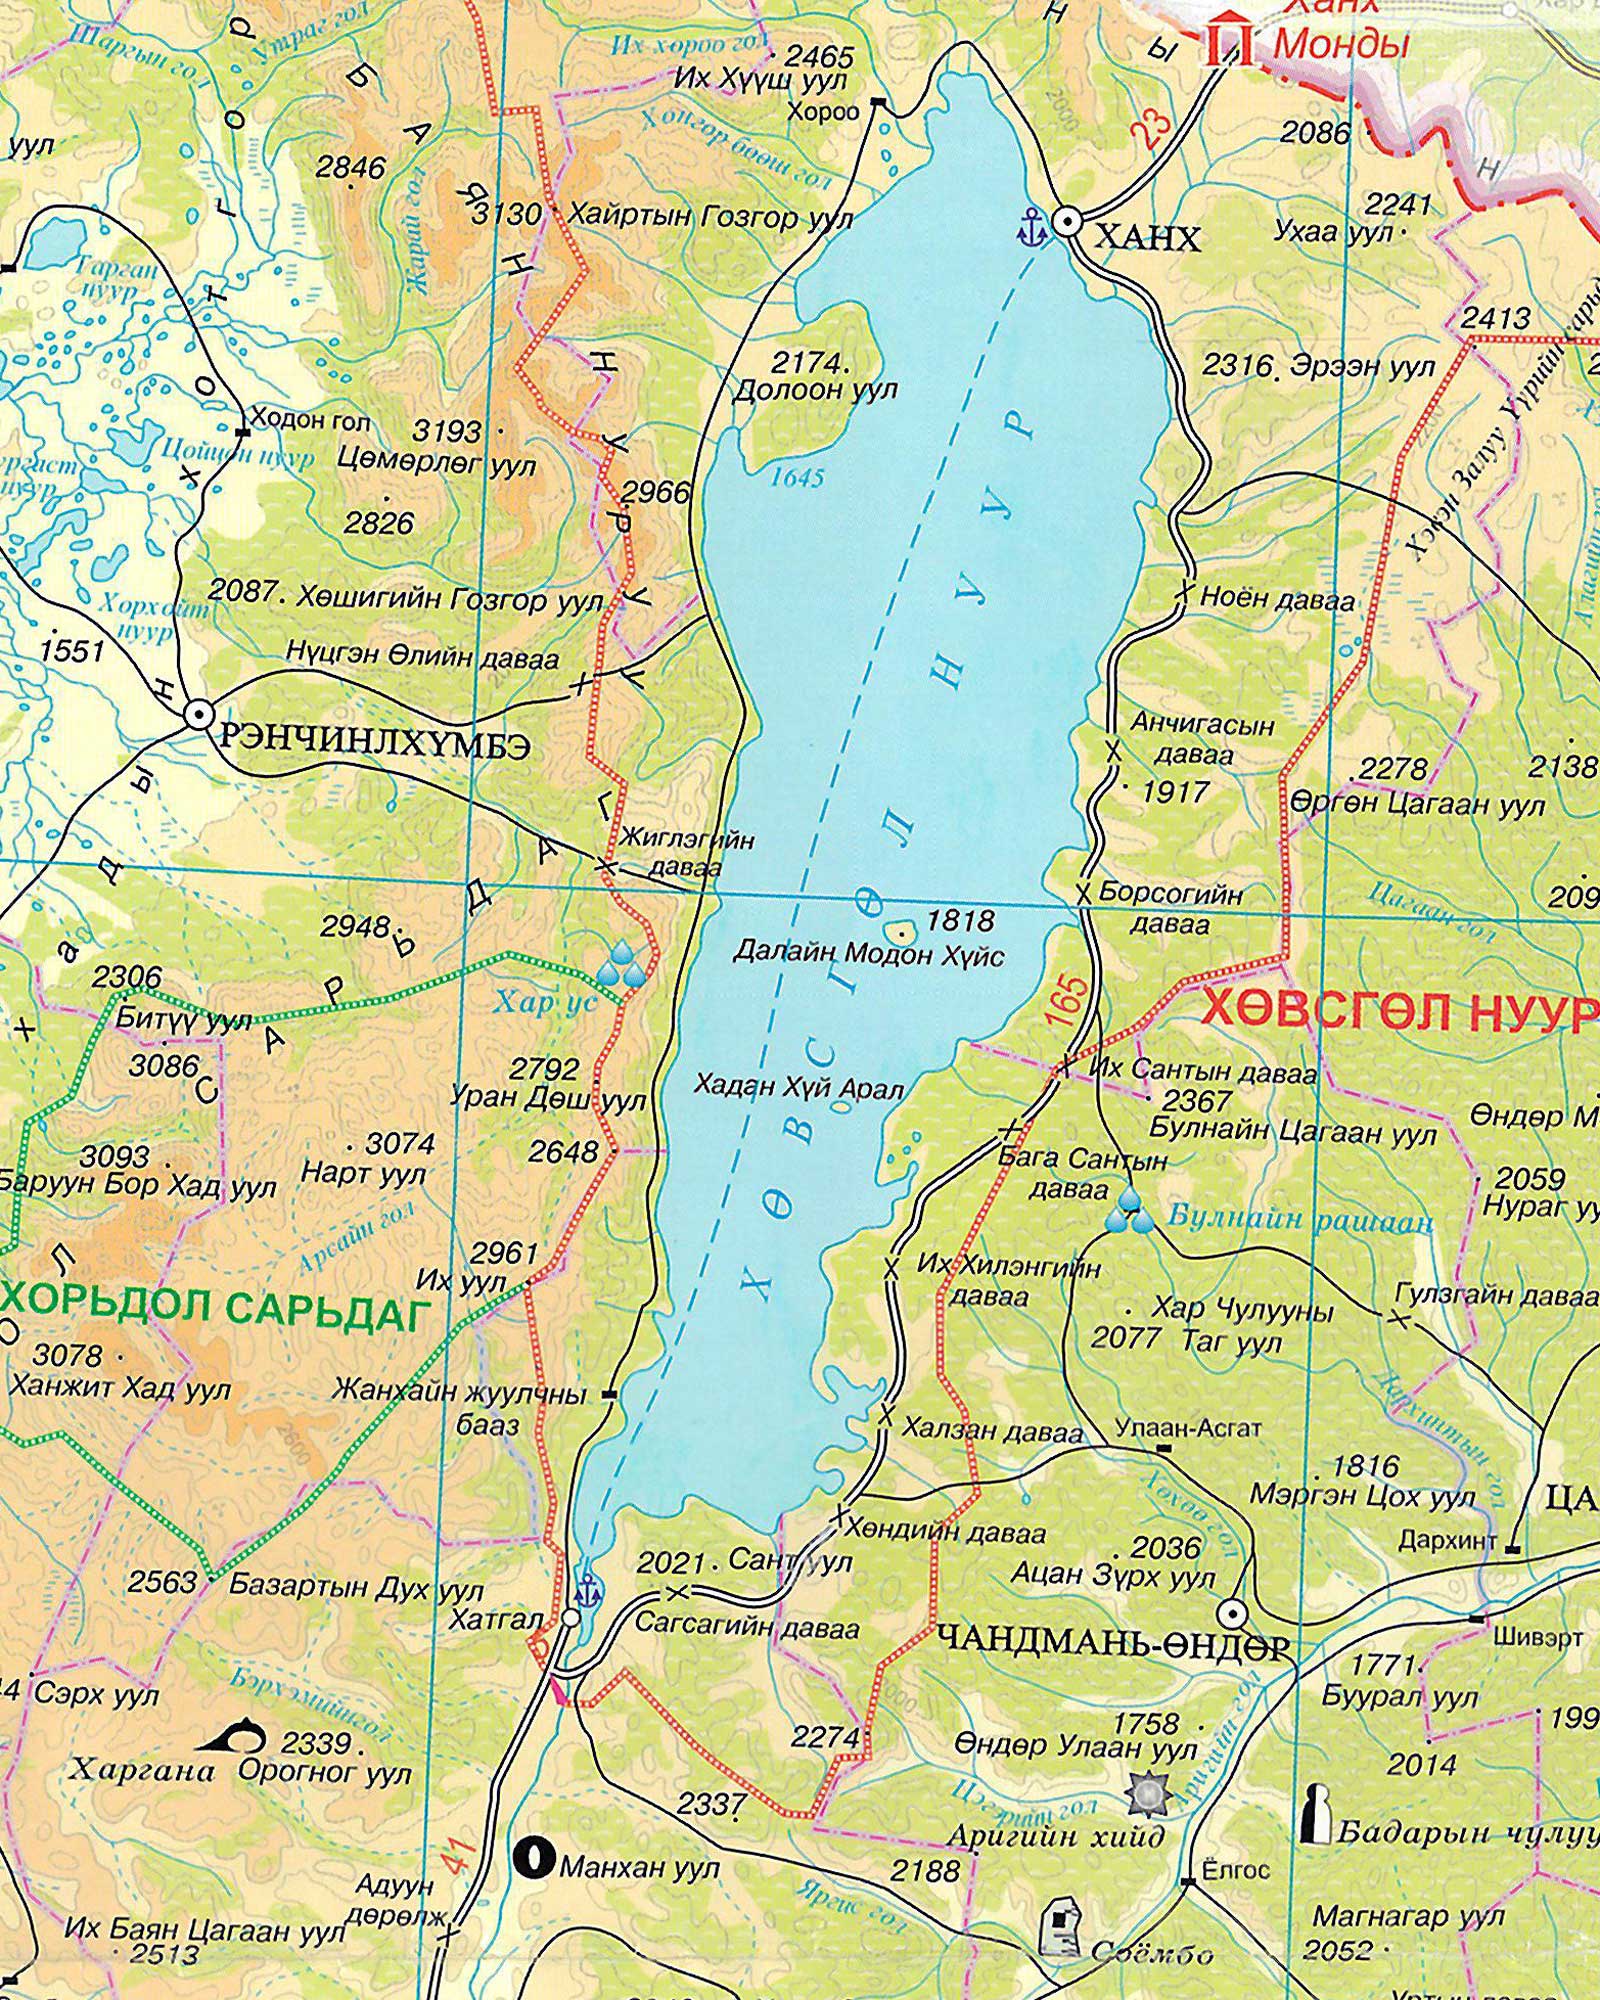 Photo. Khuvsgol lake area map.